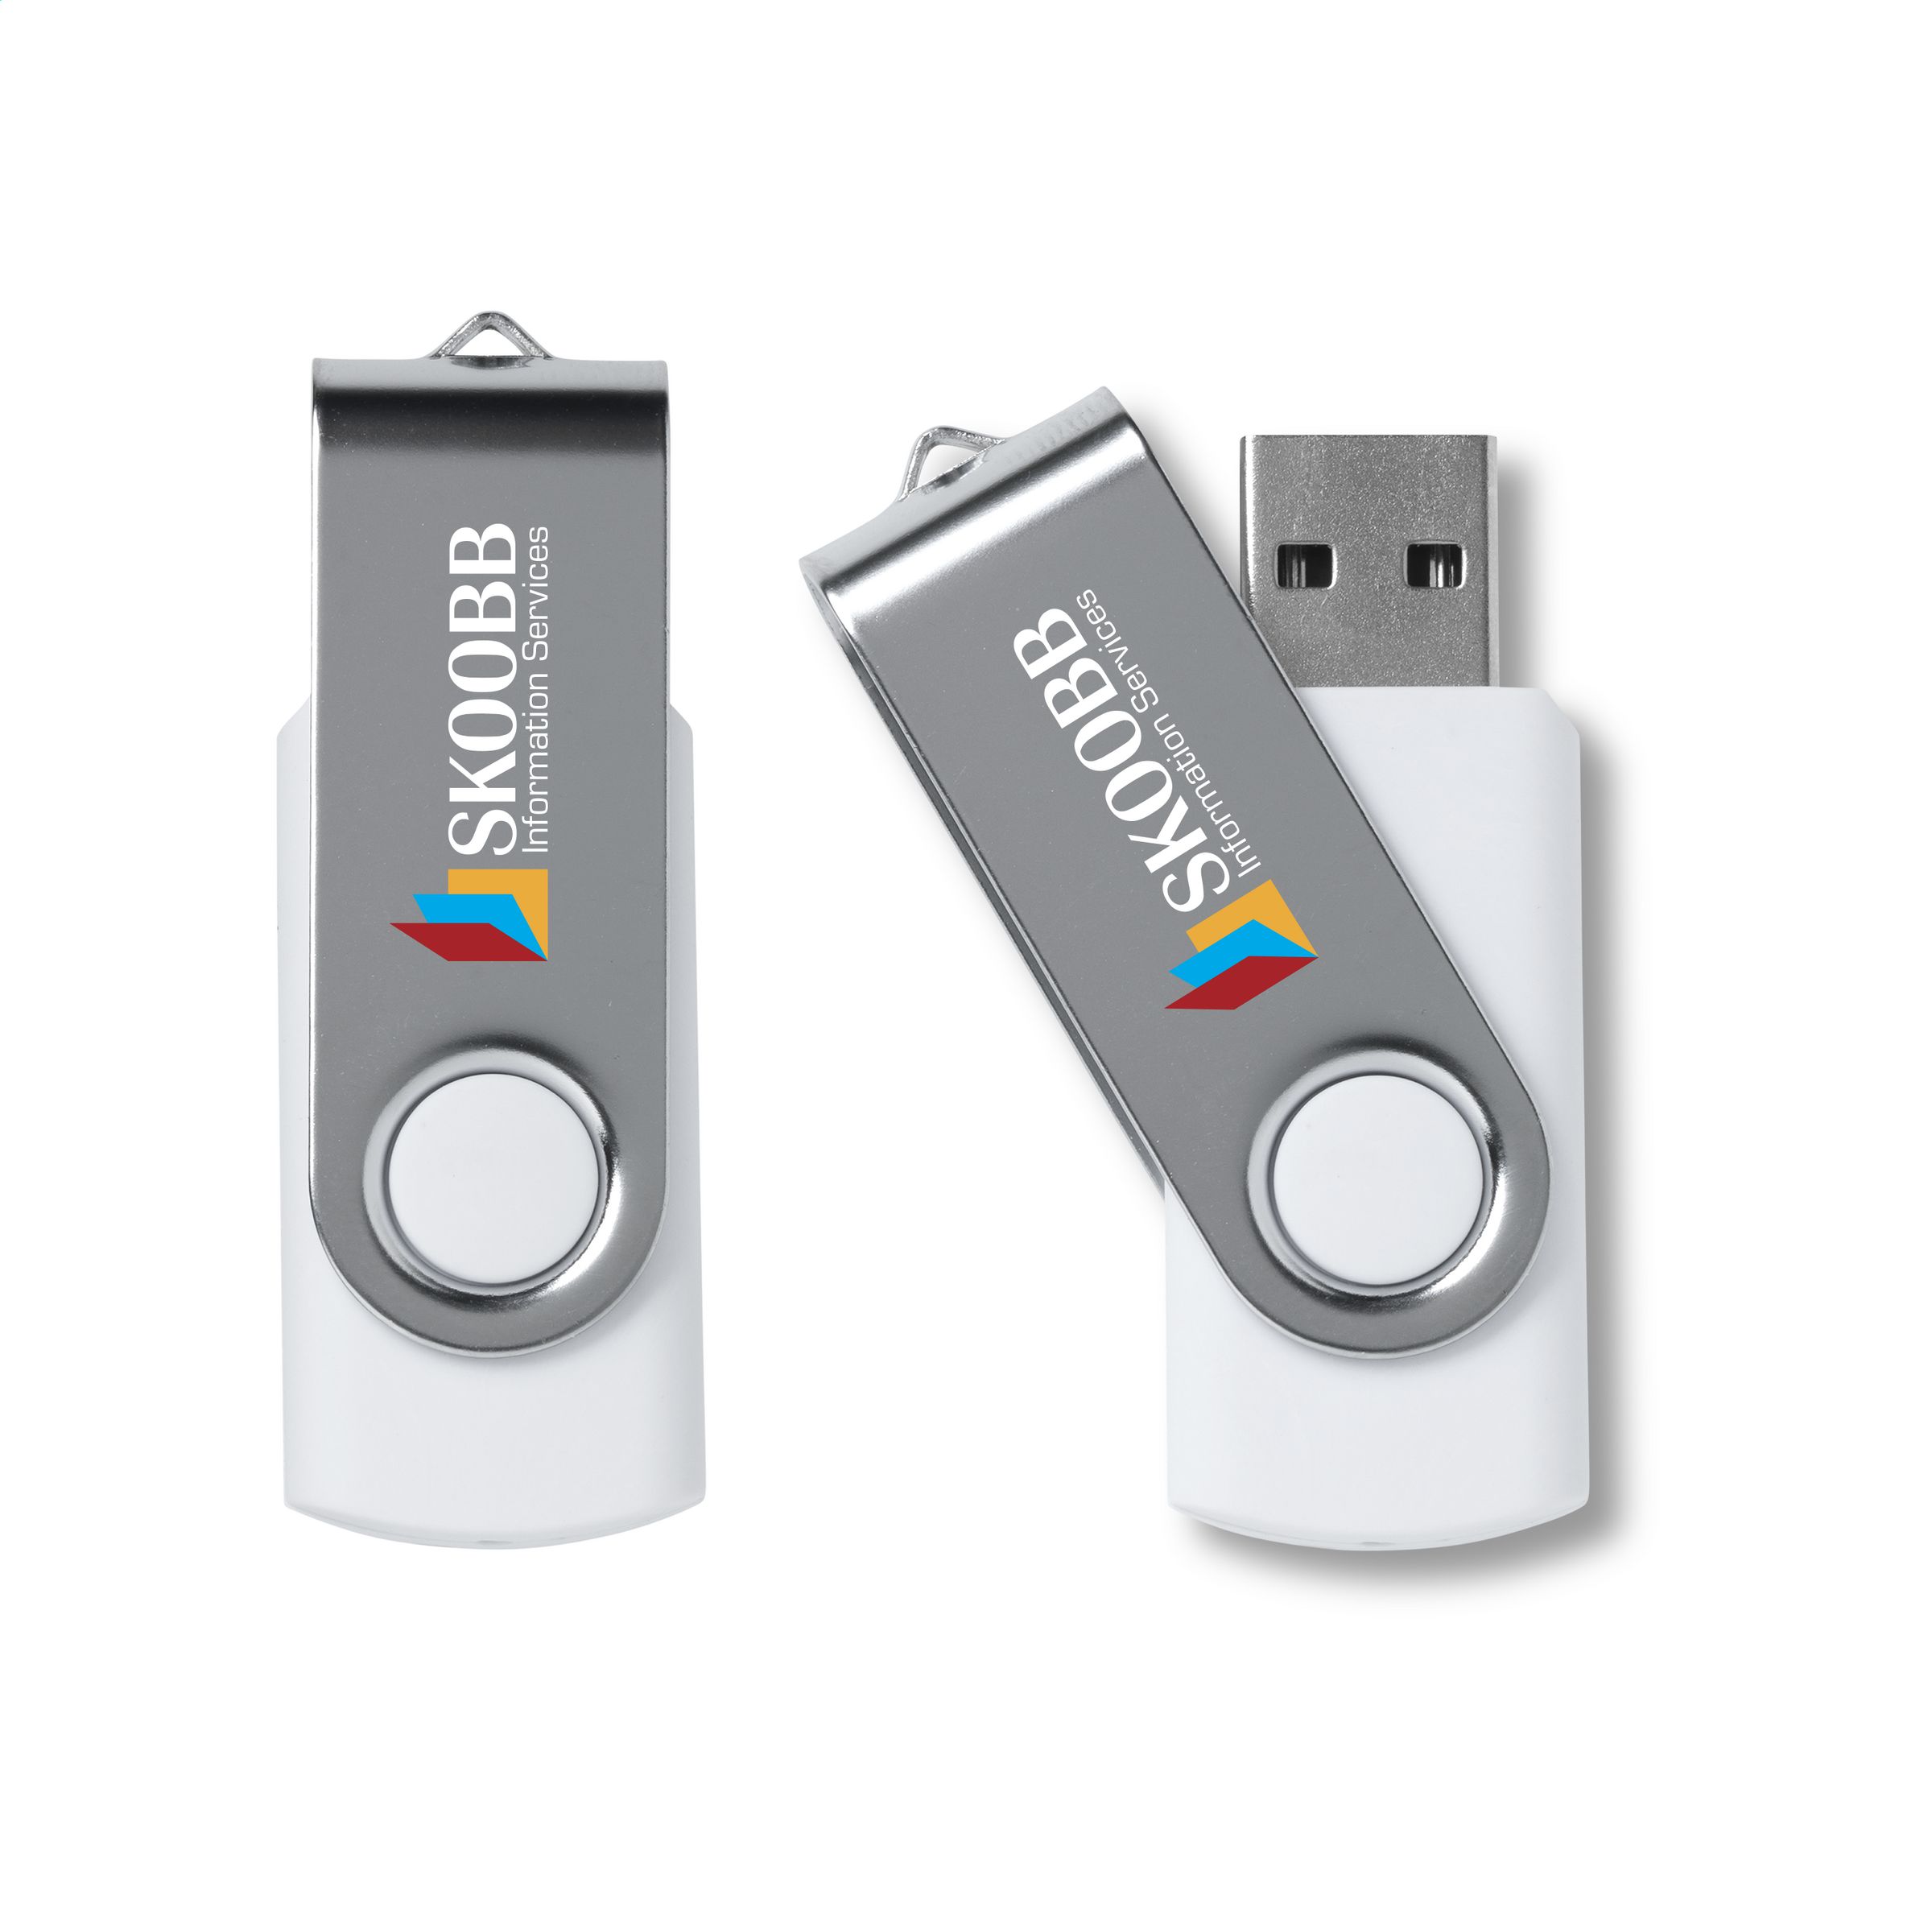 USB 2.0 DataSafe - Casole d'Elsa